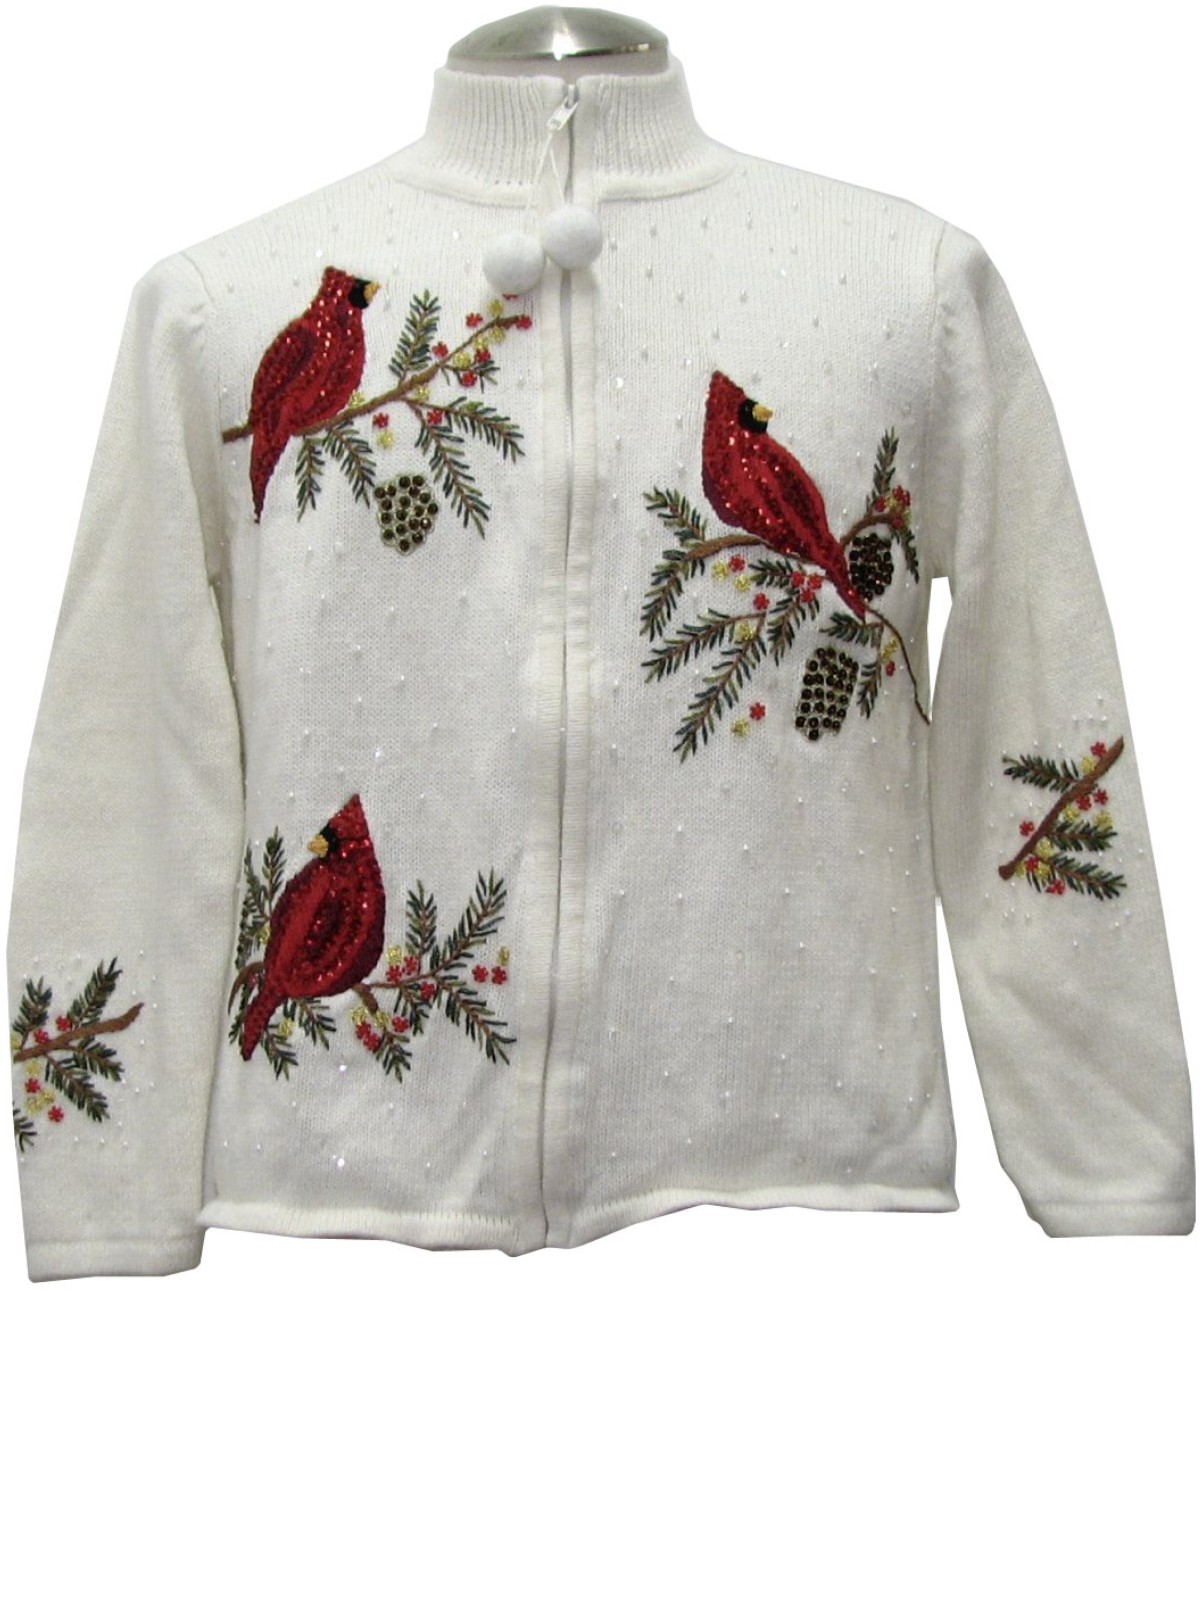 Ugly sweater cardinals Plum Street